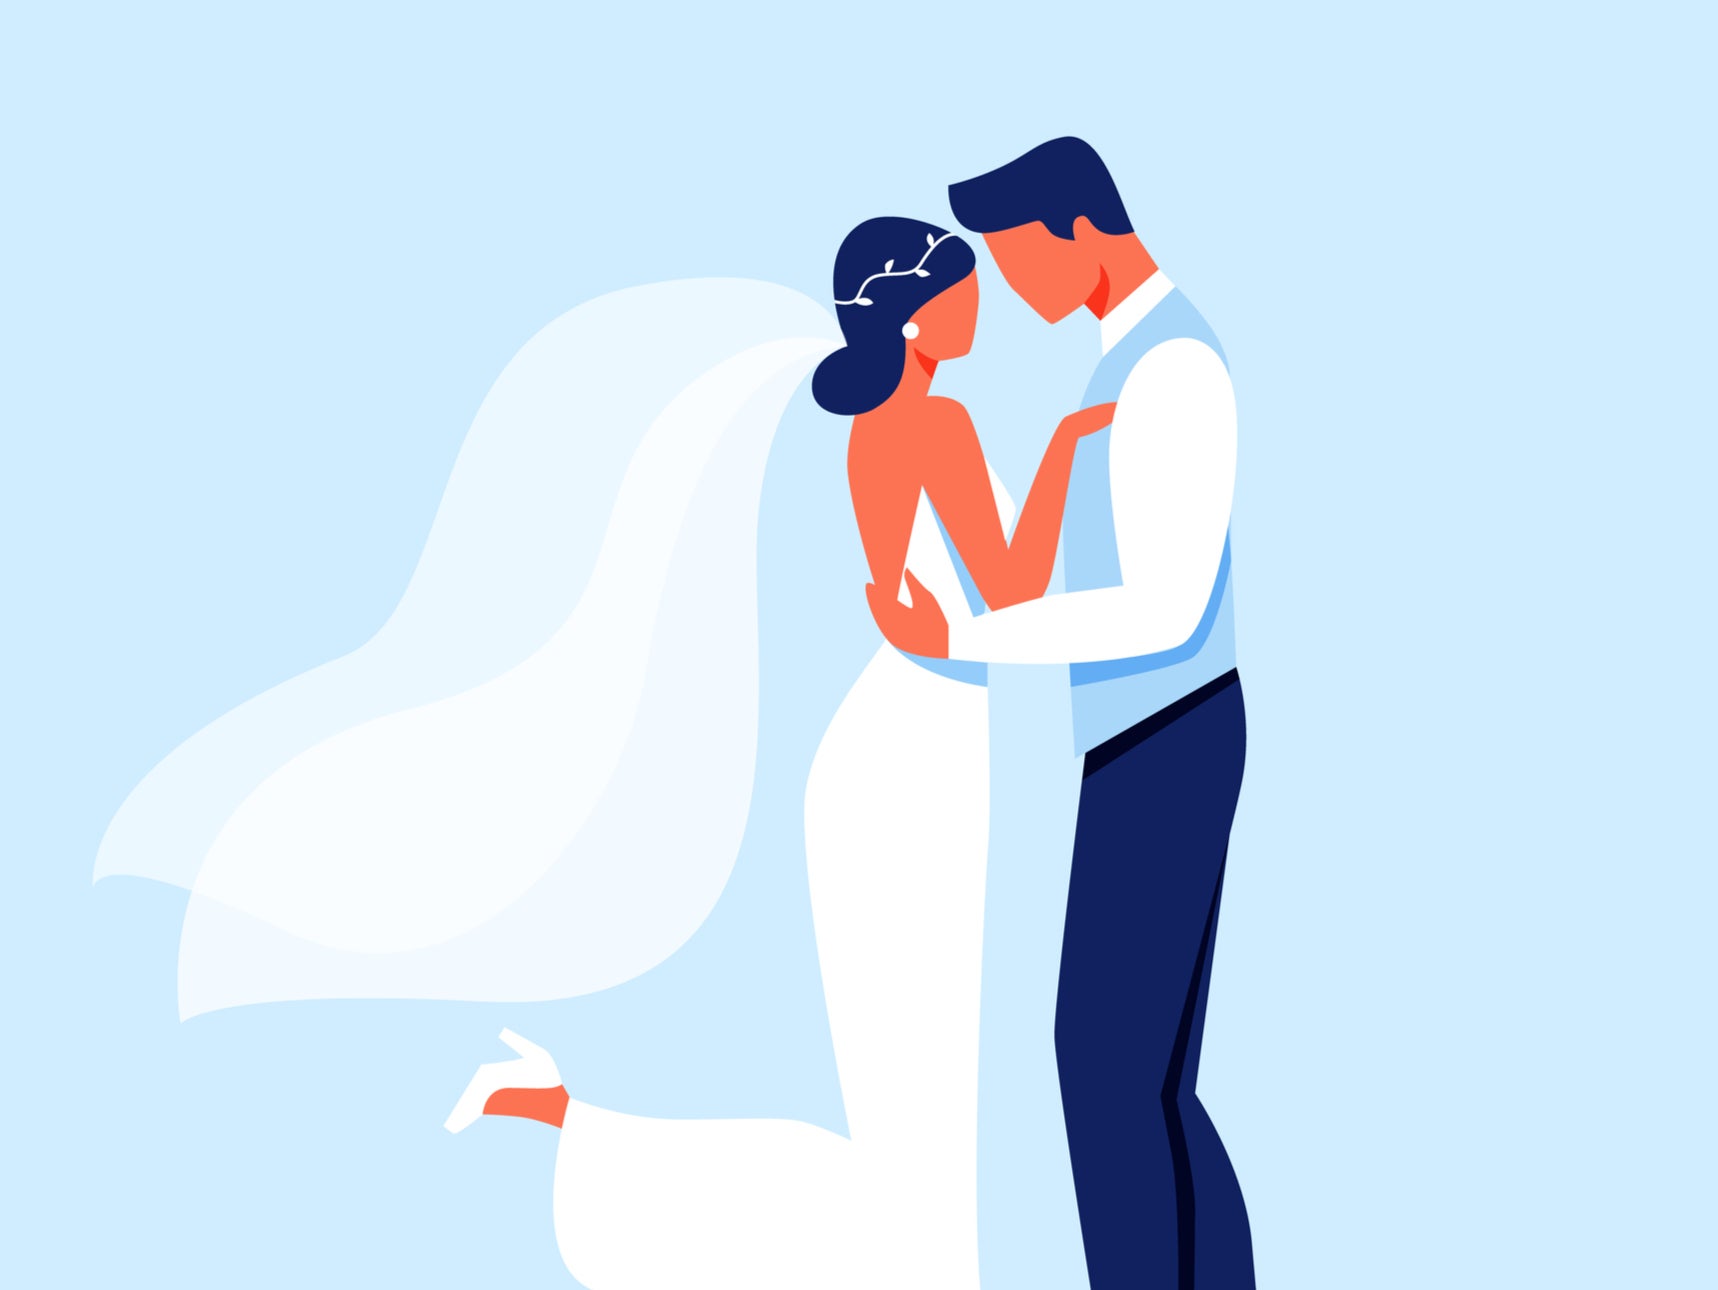 Married men live longer than single women, study suggests